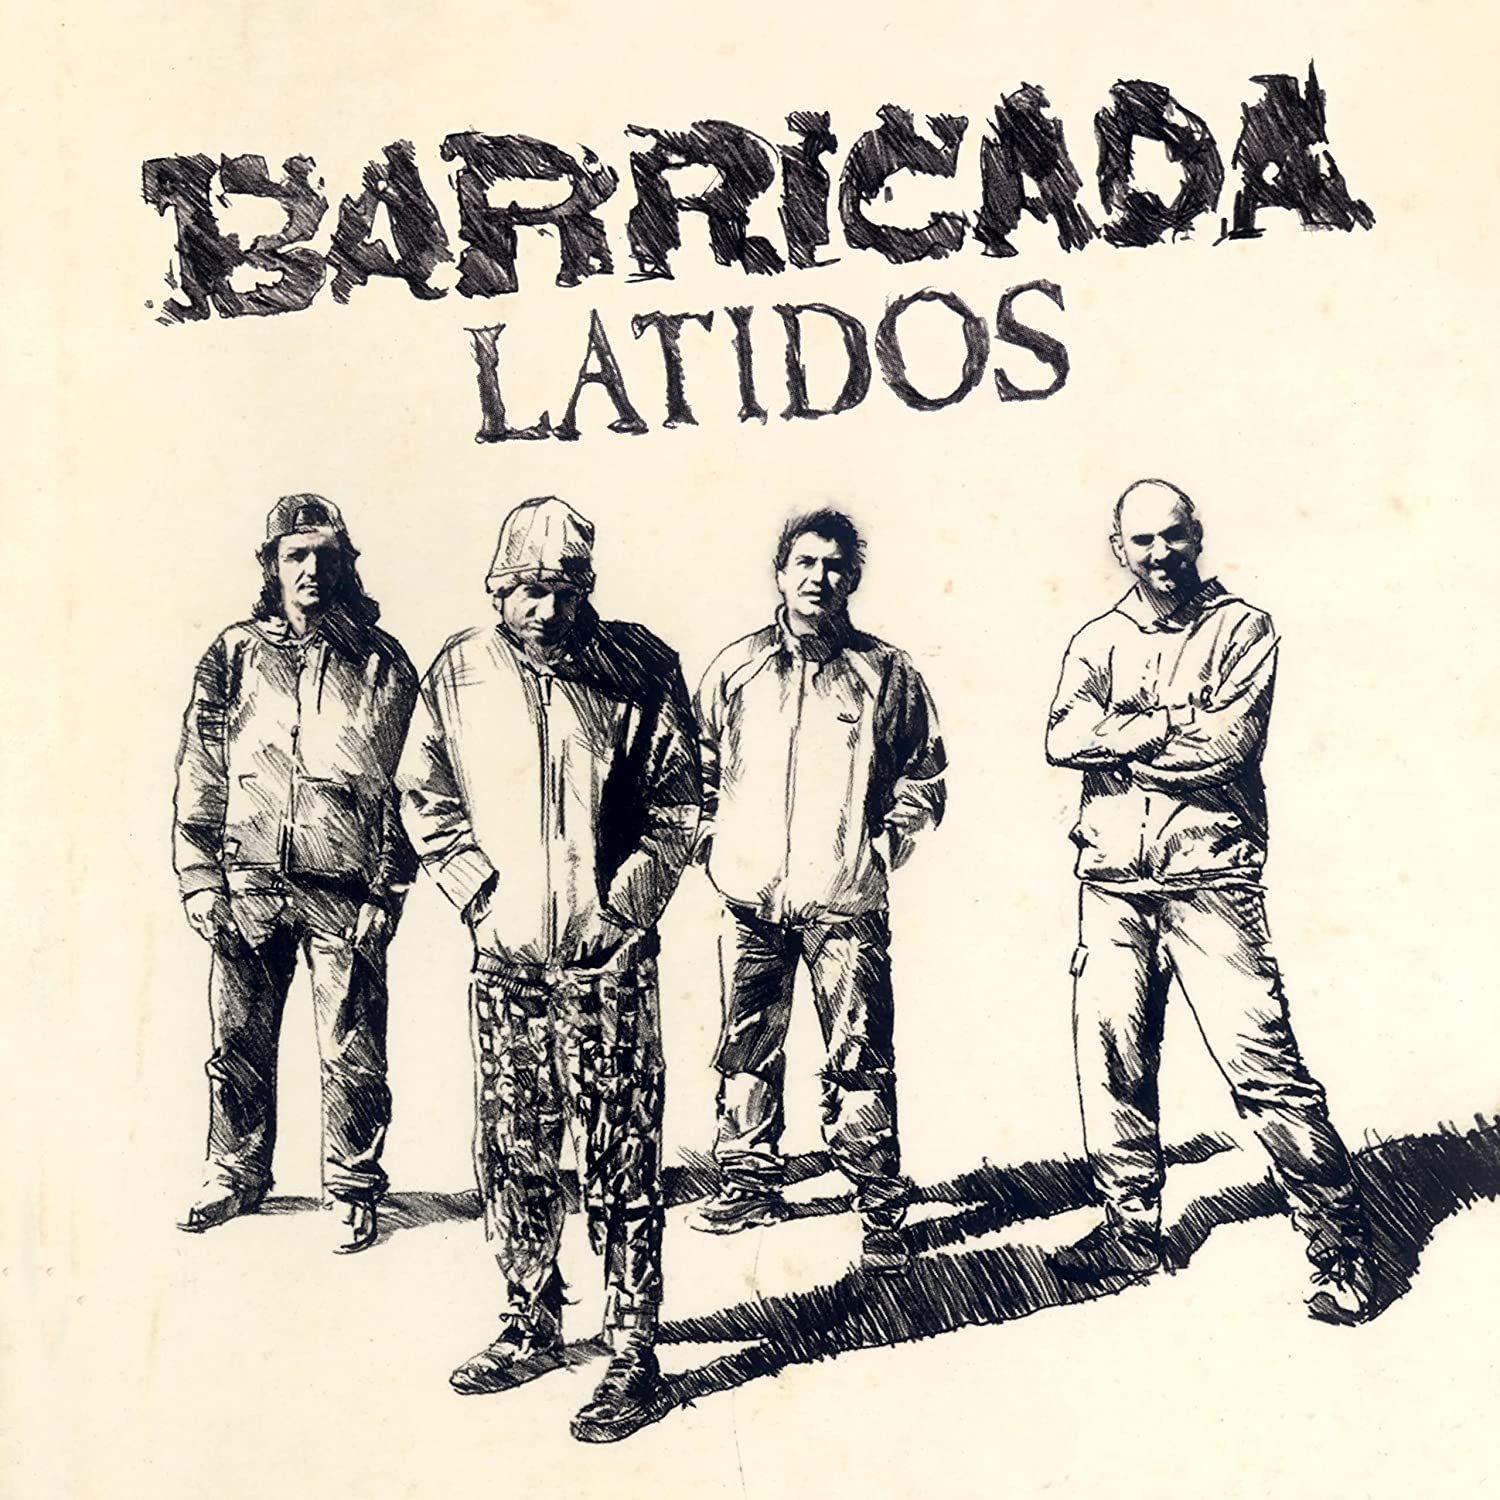 Barricada Latidos Vinyl LP+CD